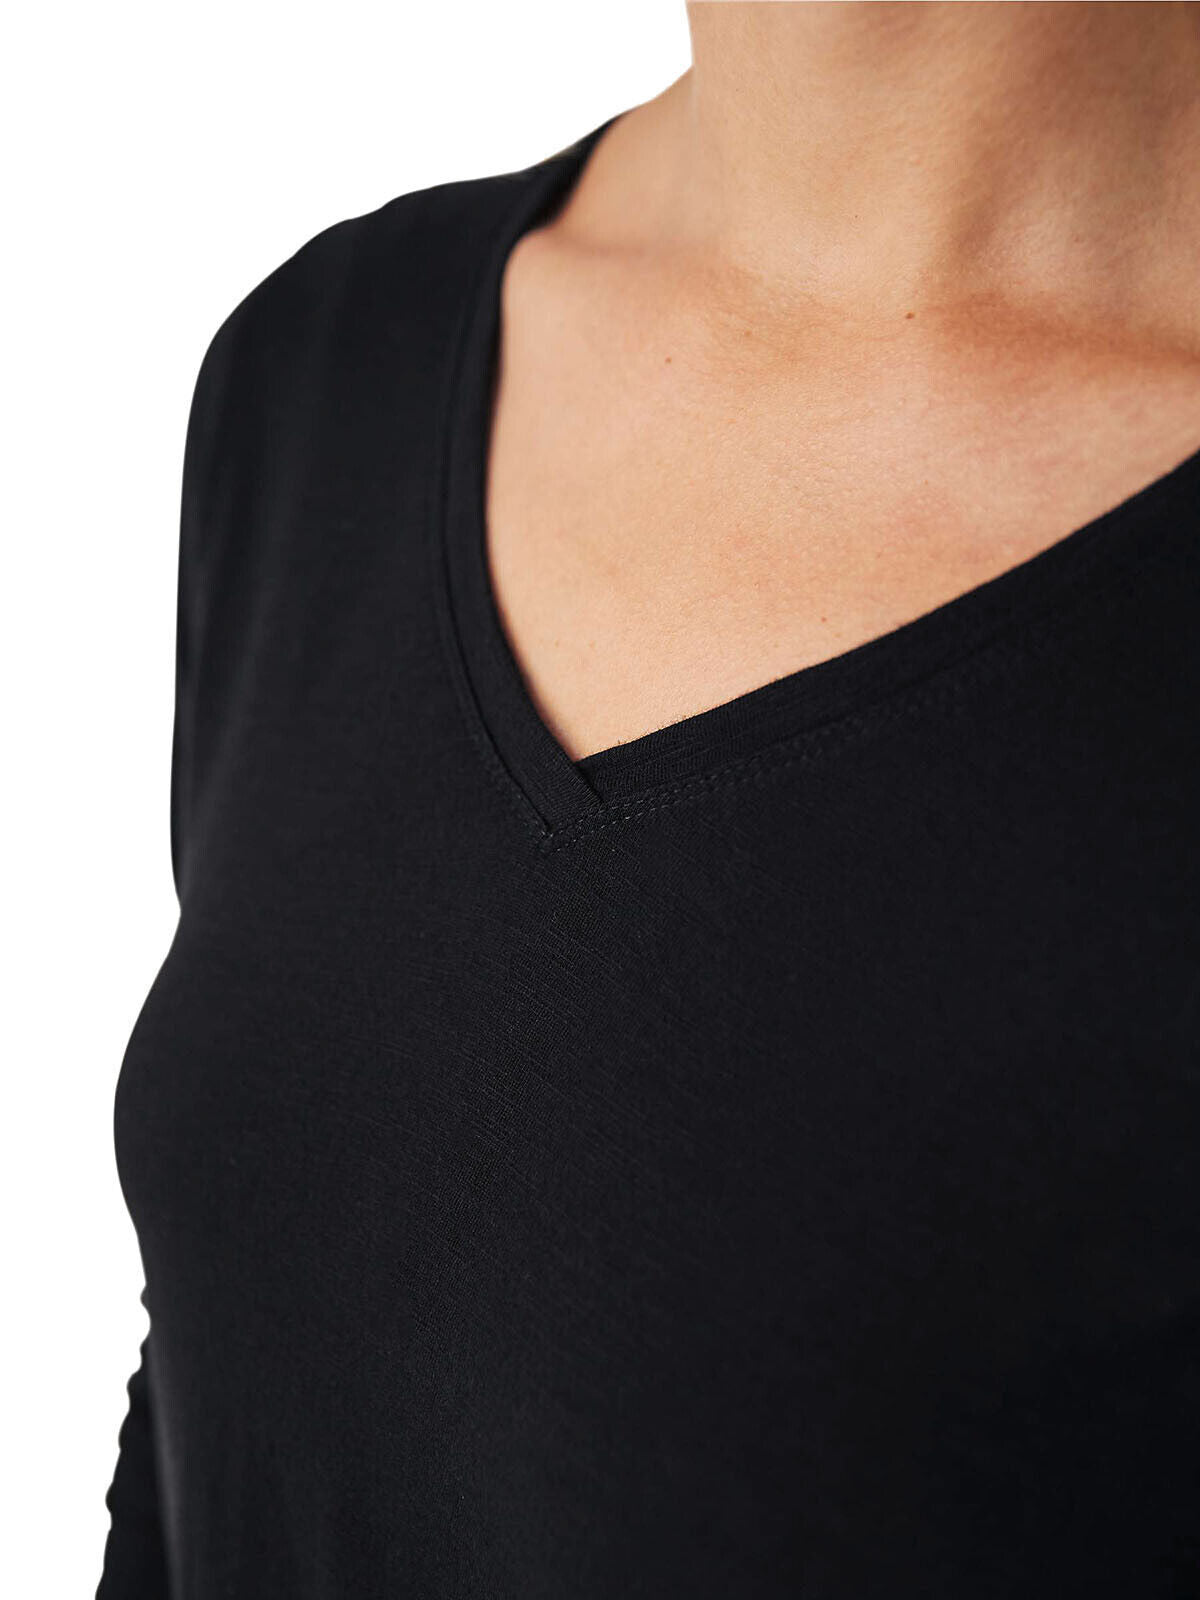 EX Fat Face Black Pure Cotton KEMI 3/4 Sleeve Top Sizes 10, 12, 14, 16, 18, 24